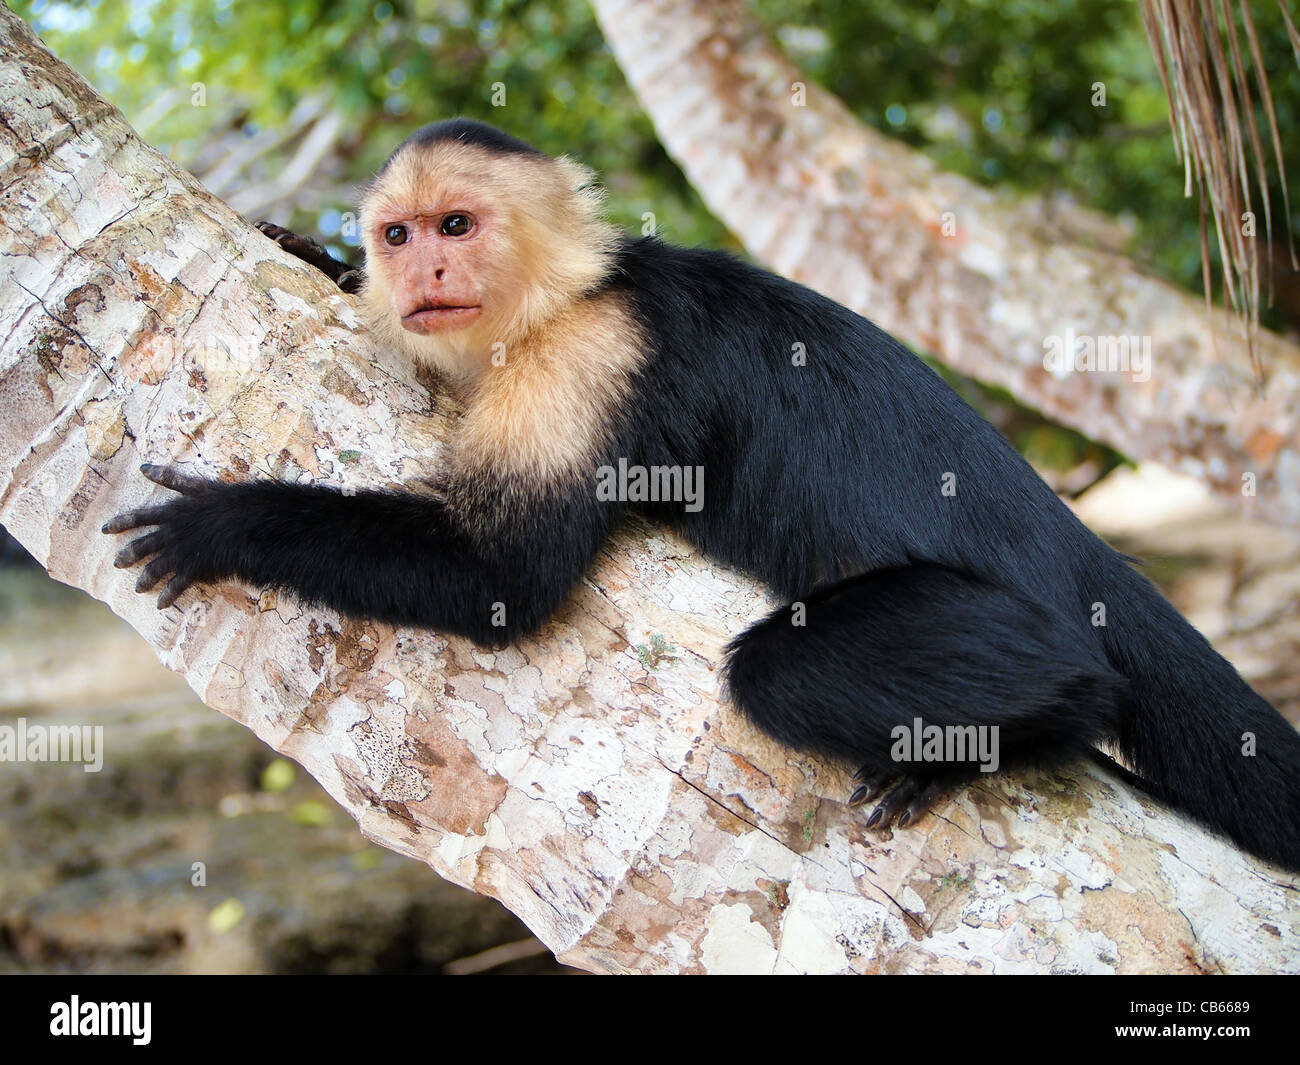 White-faced capuchin monkey on coconut tree, national park of Cahuita, Caribbean, Costa Rica Stock Photo